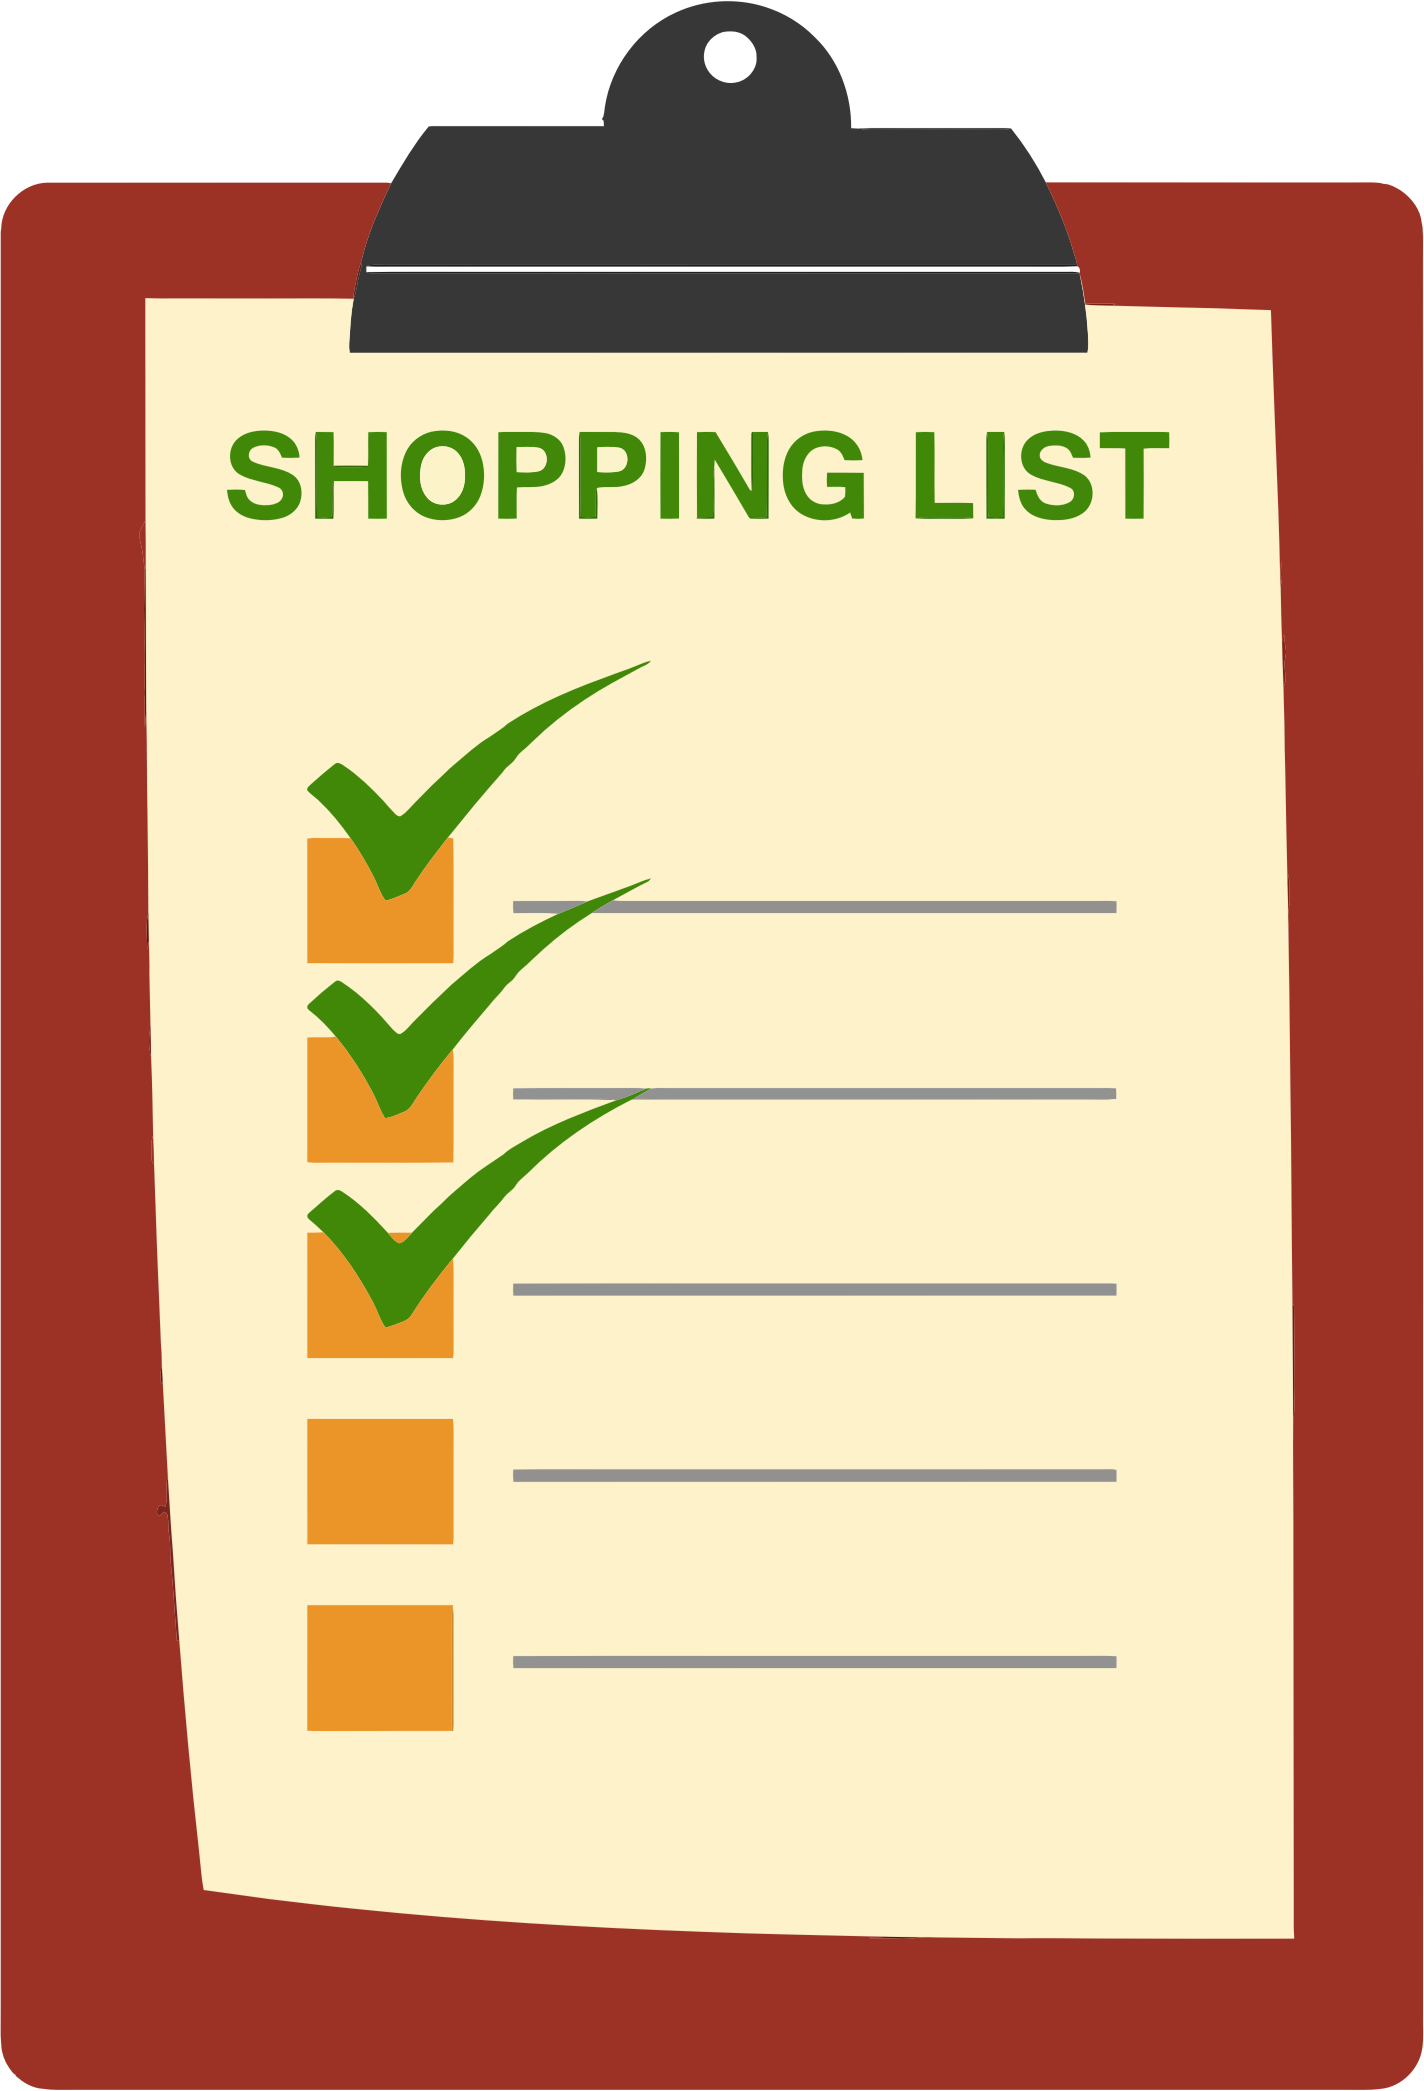 Shopping list. Список покупок. Список покупок картинка. Shopping list шаблон. Making a shopping list